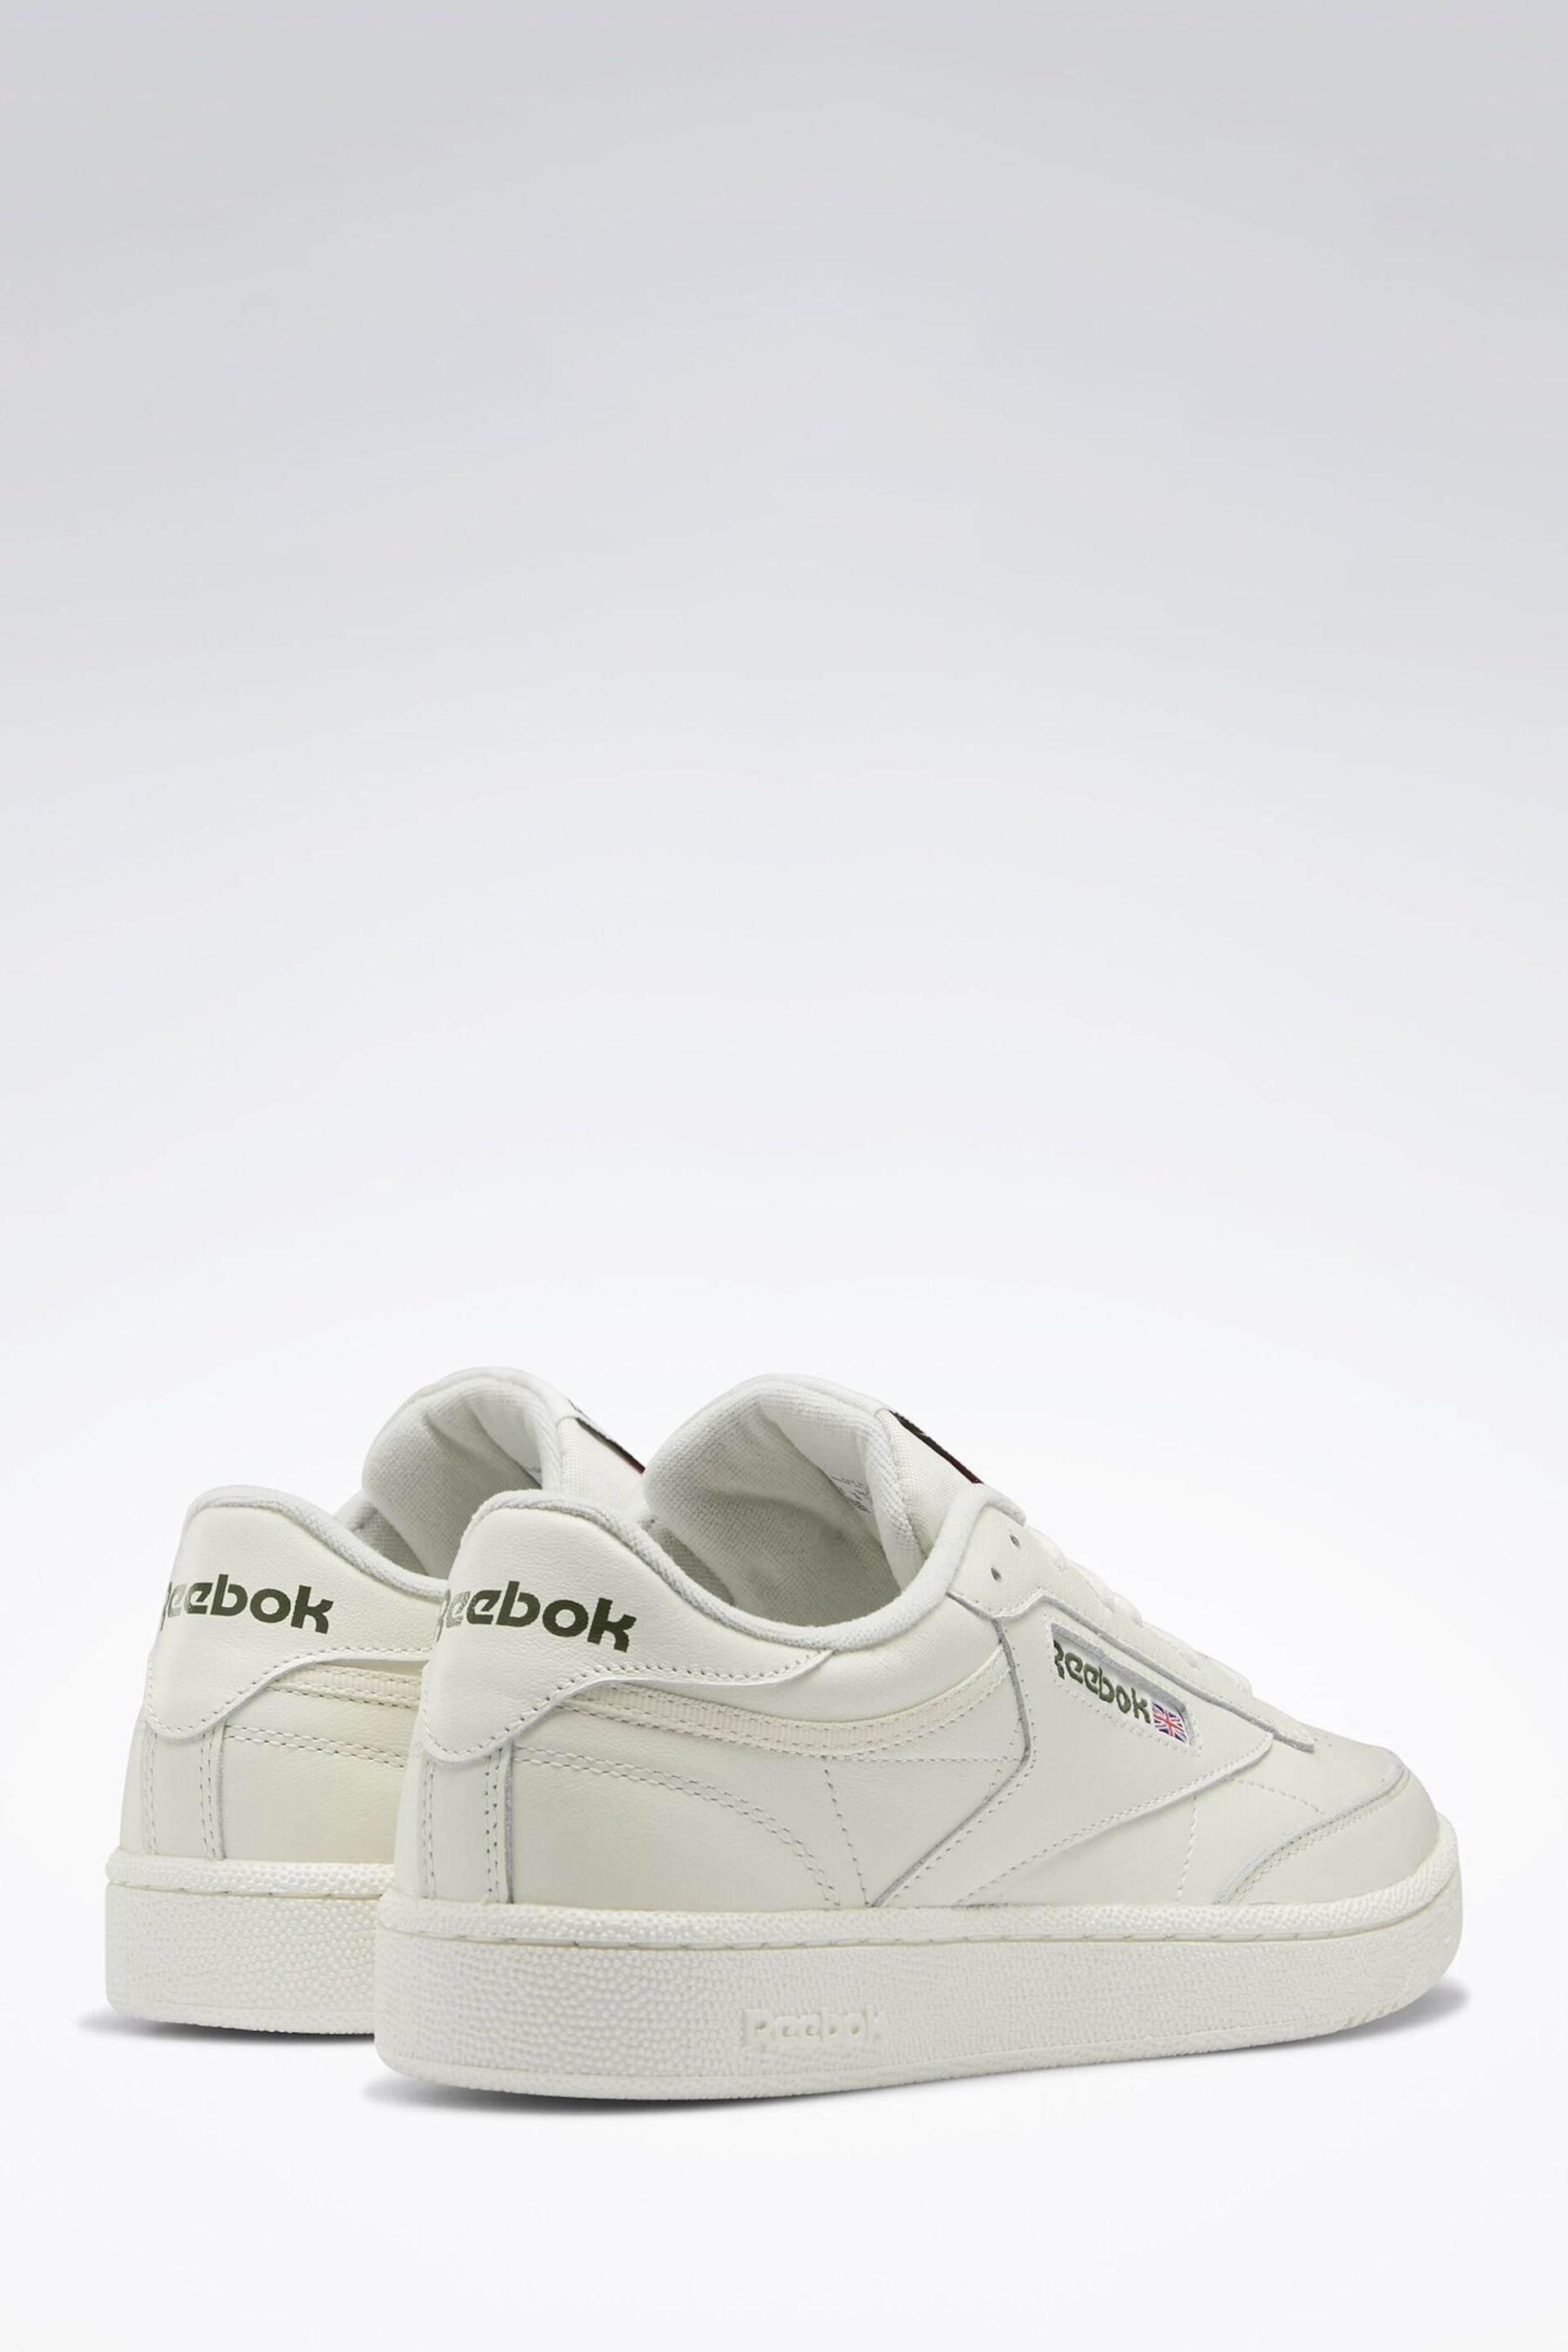 Reebok Cream C 85 Club Shoes - Image 5 of 9